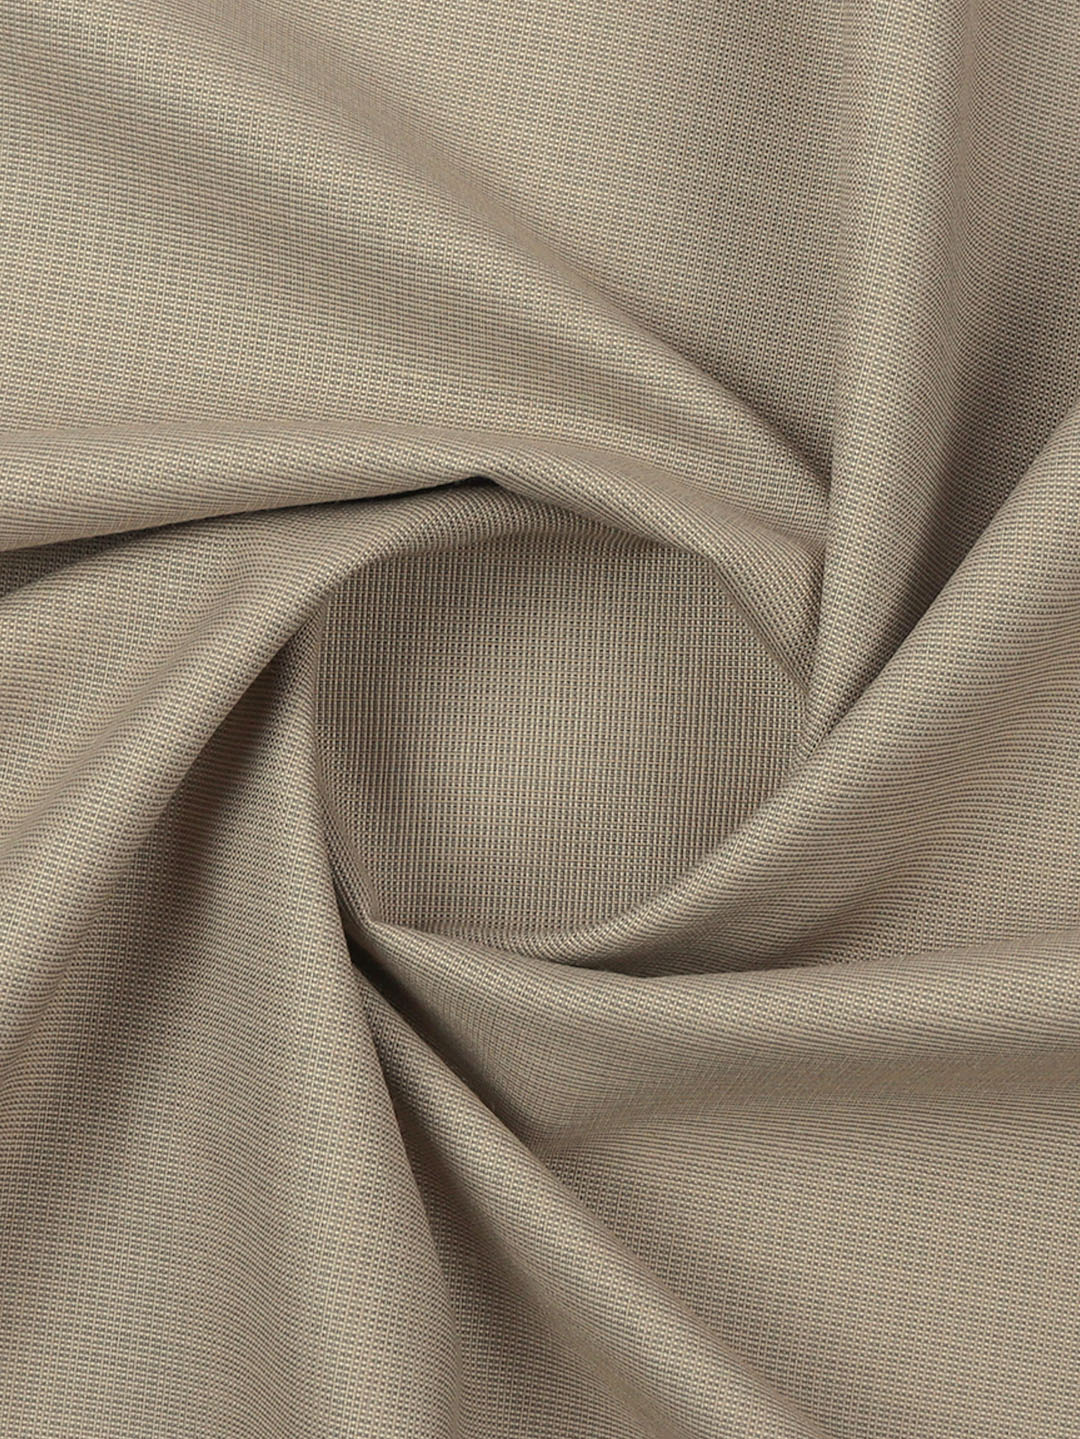 Cotton Fancy Brown Colour Plain Suiting Fabric All Days